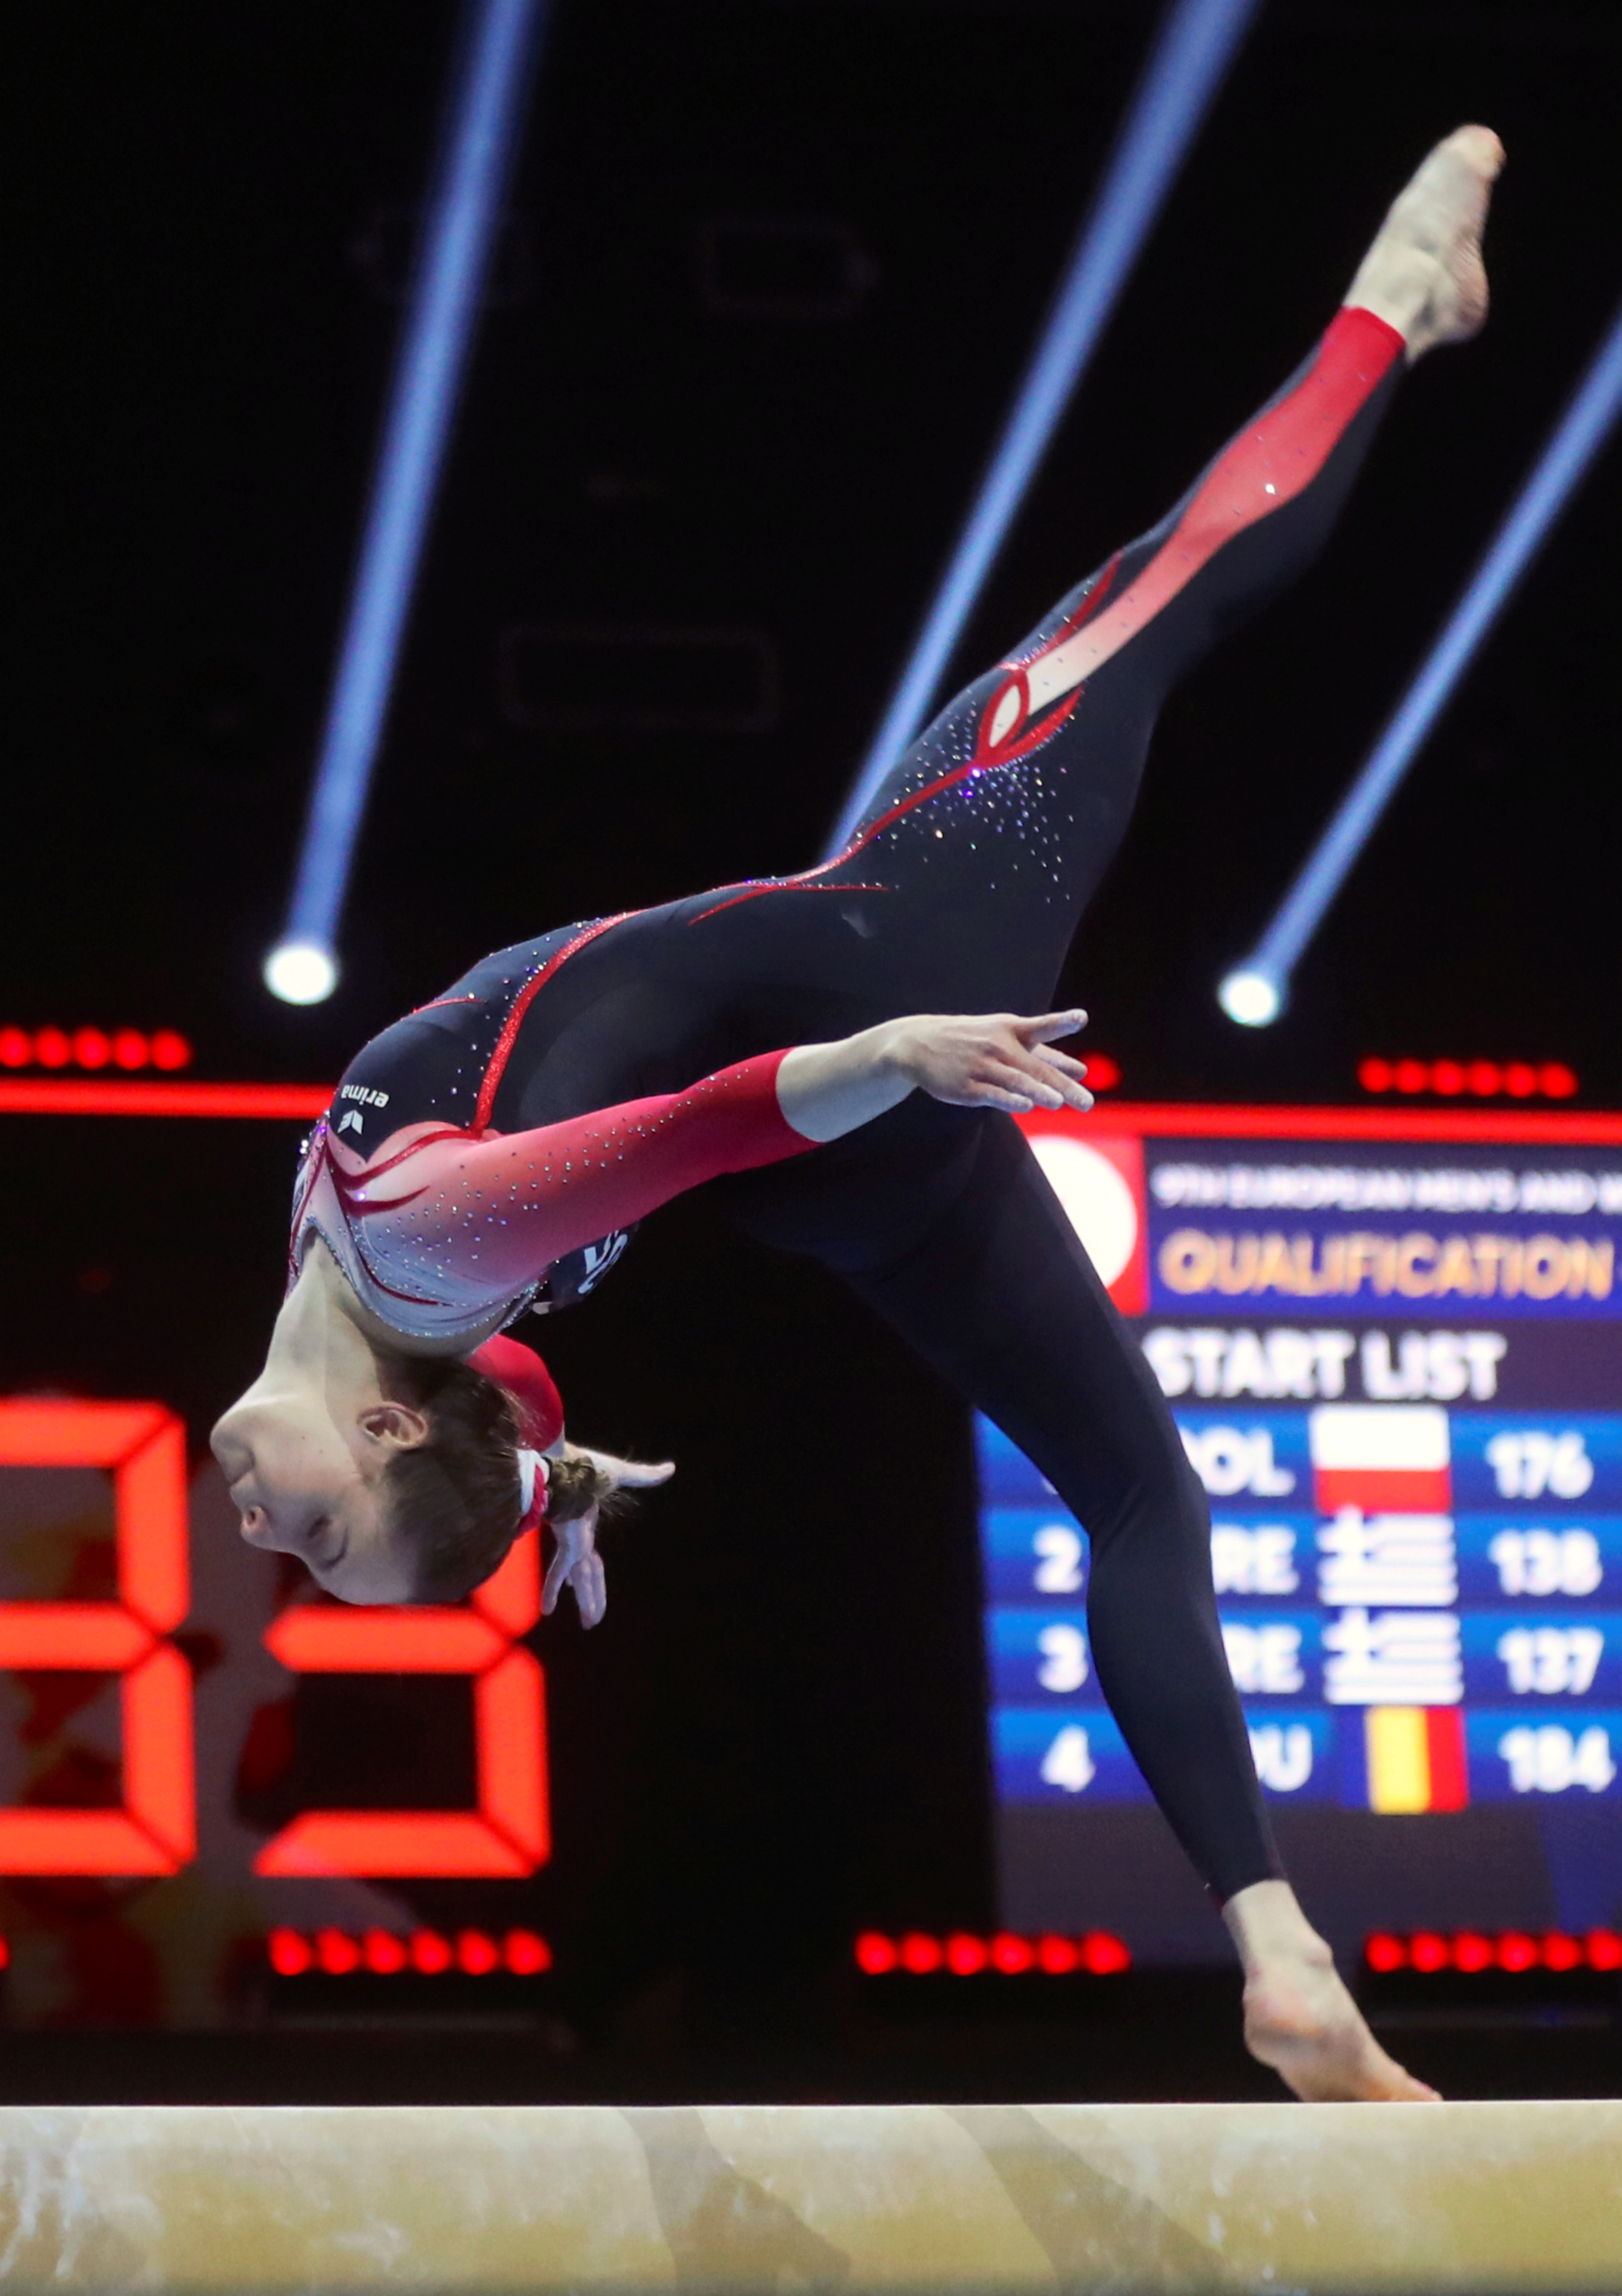 2021 European Artistic Gymnastics Championships